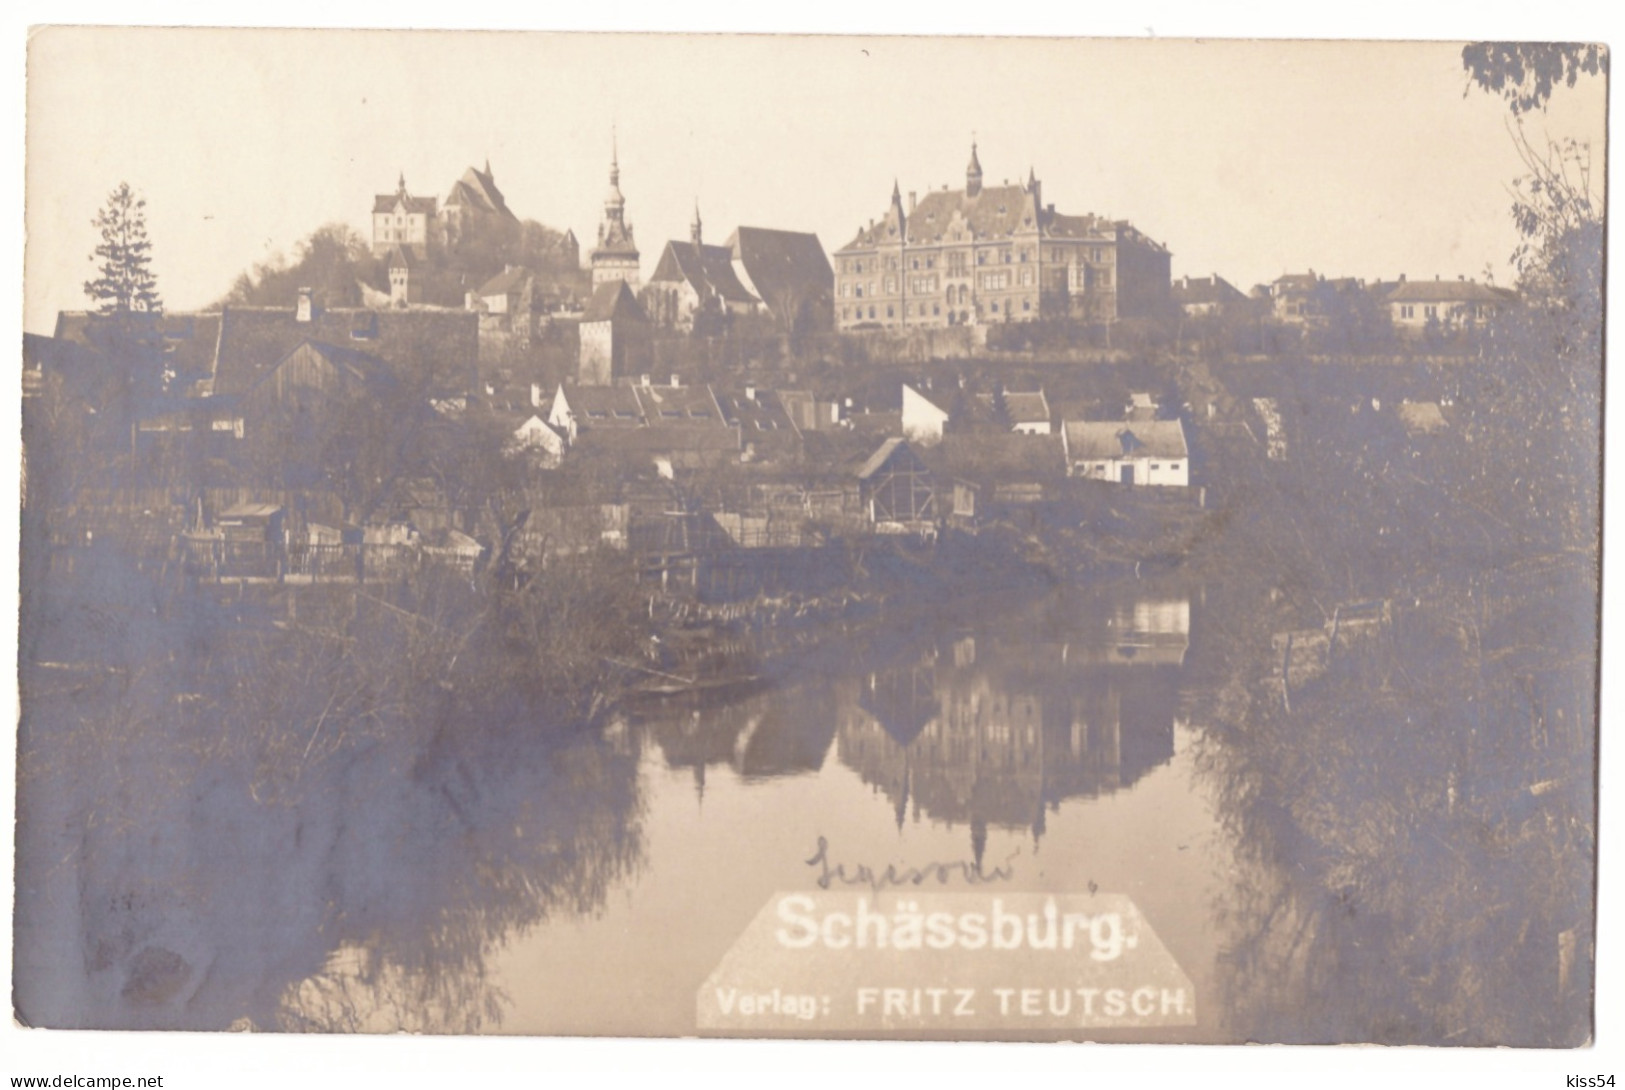 RO 38 - 18226 SIGHISOARA, Mures, Romania - Old Postcard, Real PHOTO - Used - 1913 - Romania